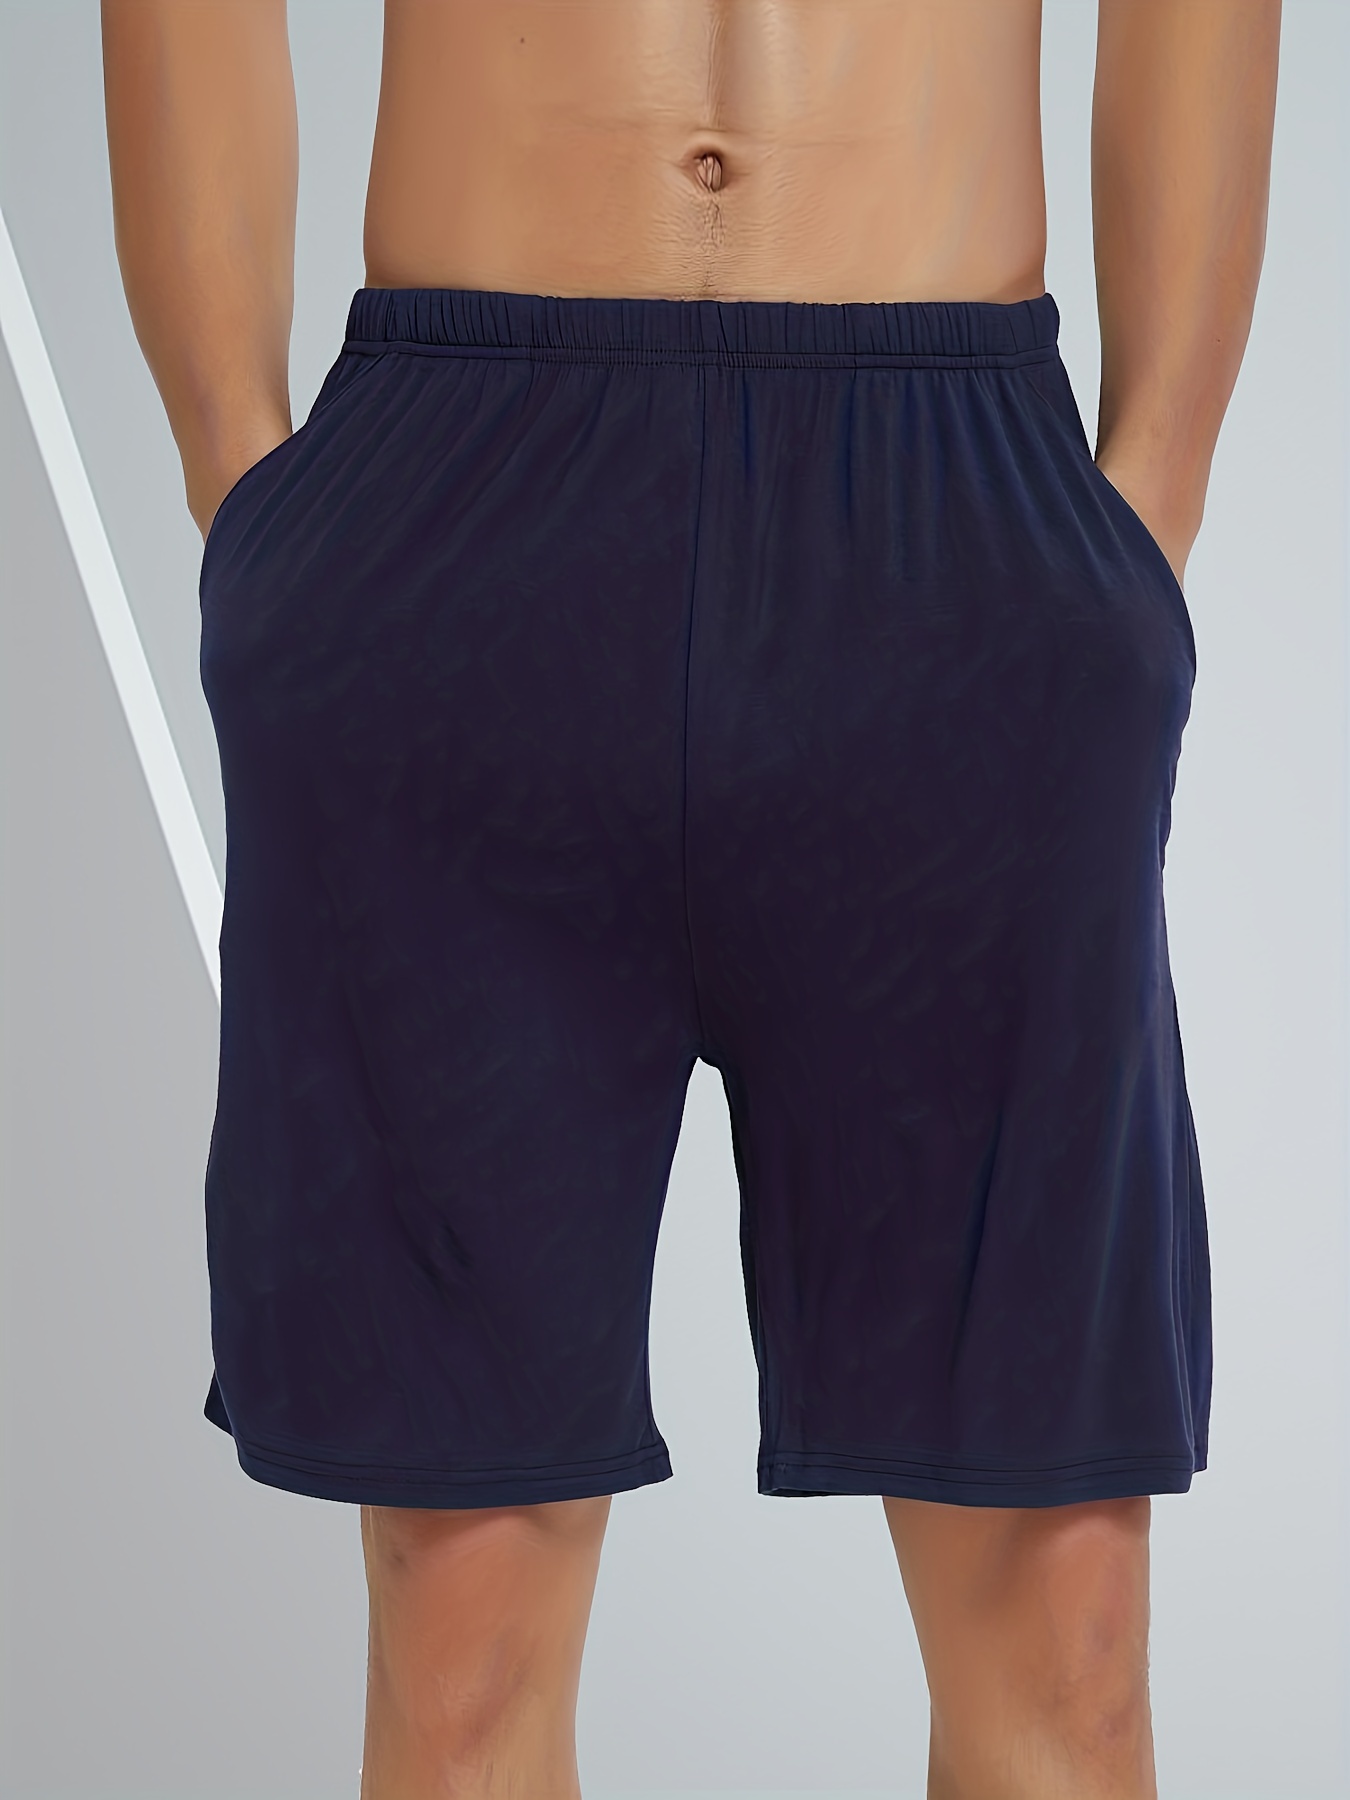 1PCS Men's Sexy Underwear Home Underpants Sleep Boxers U Pouch Soft Arrow  Shorts